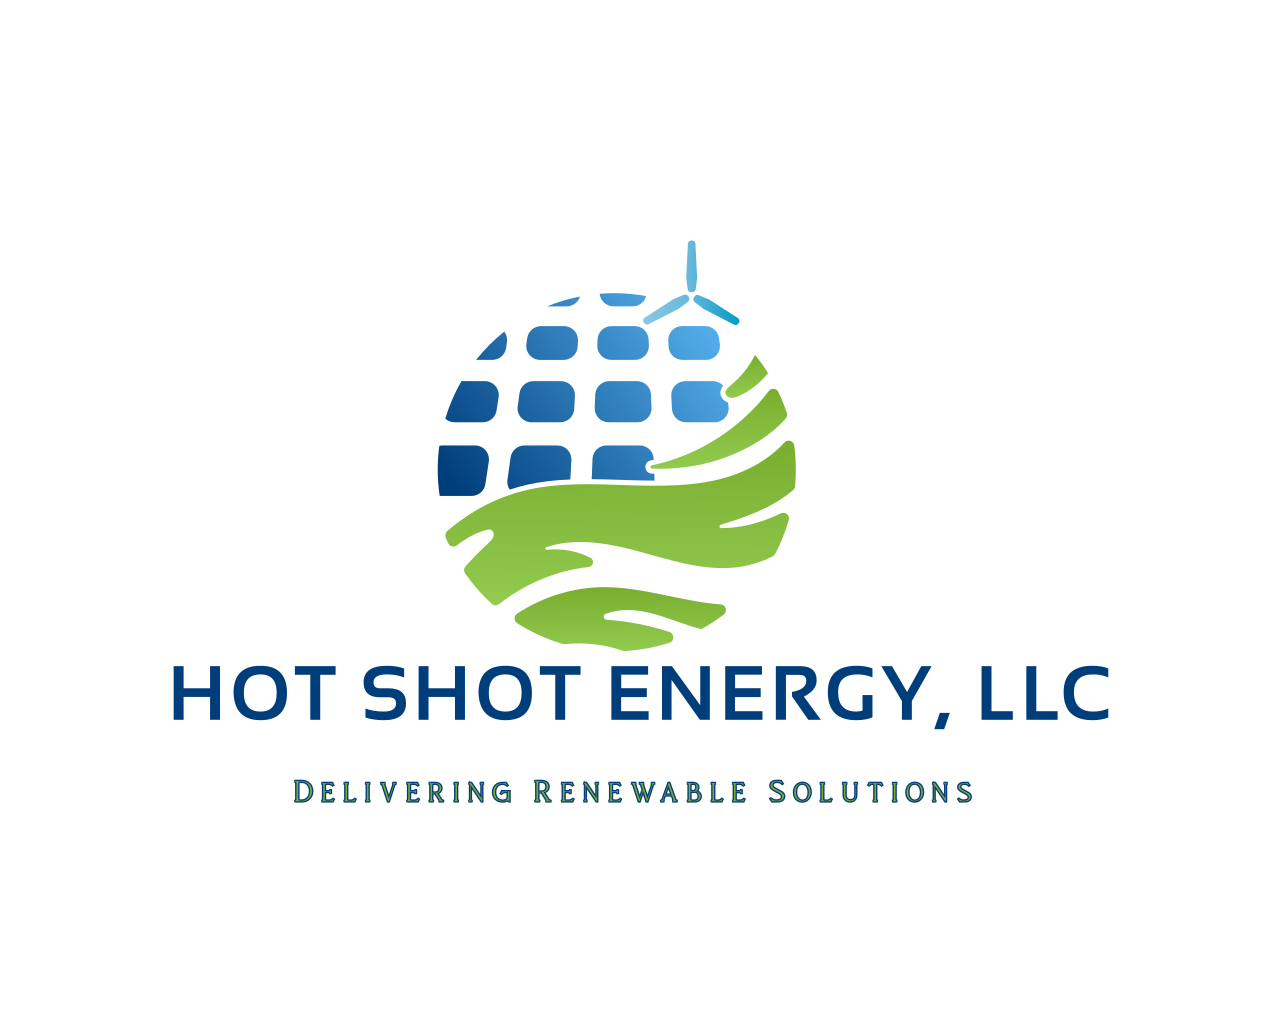 HOT SHOT ENERGY, LLC's web page